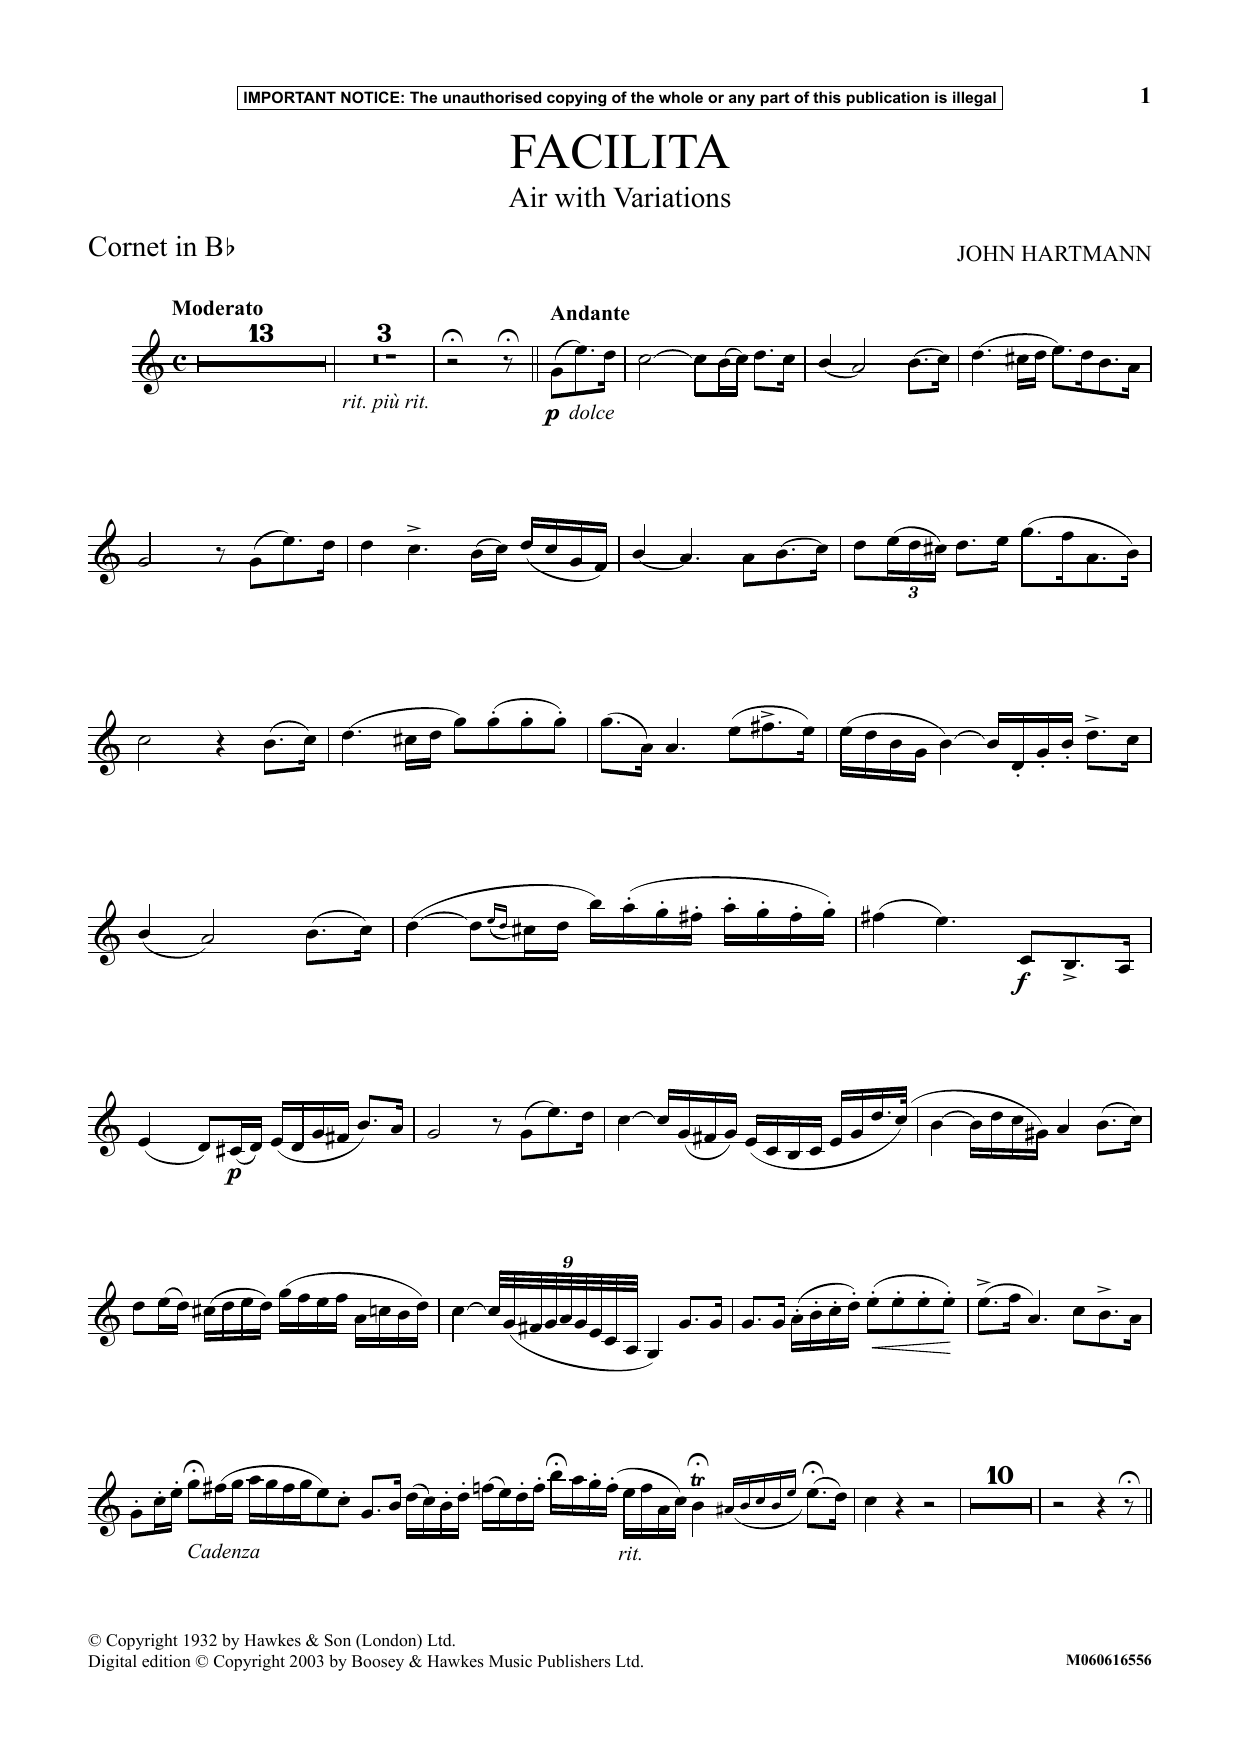 Download John Hartmann Facilita (Air With Variations) Sheet Music